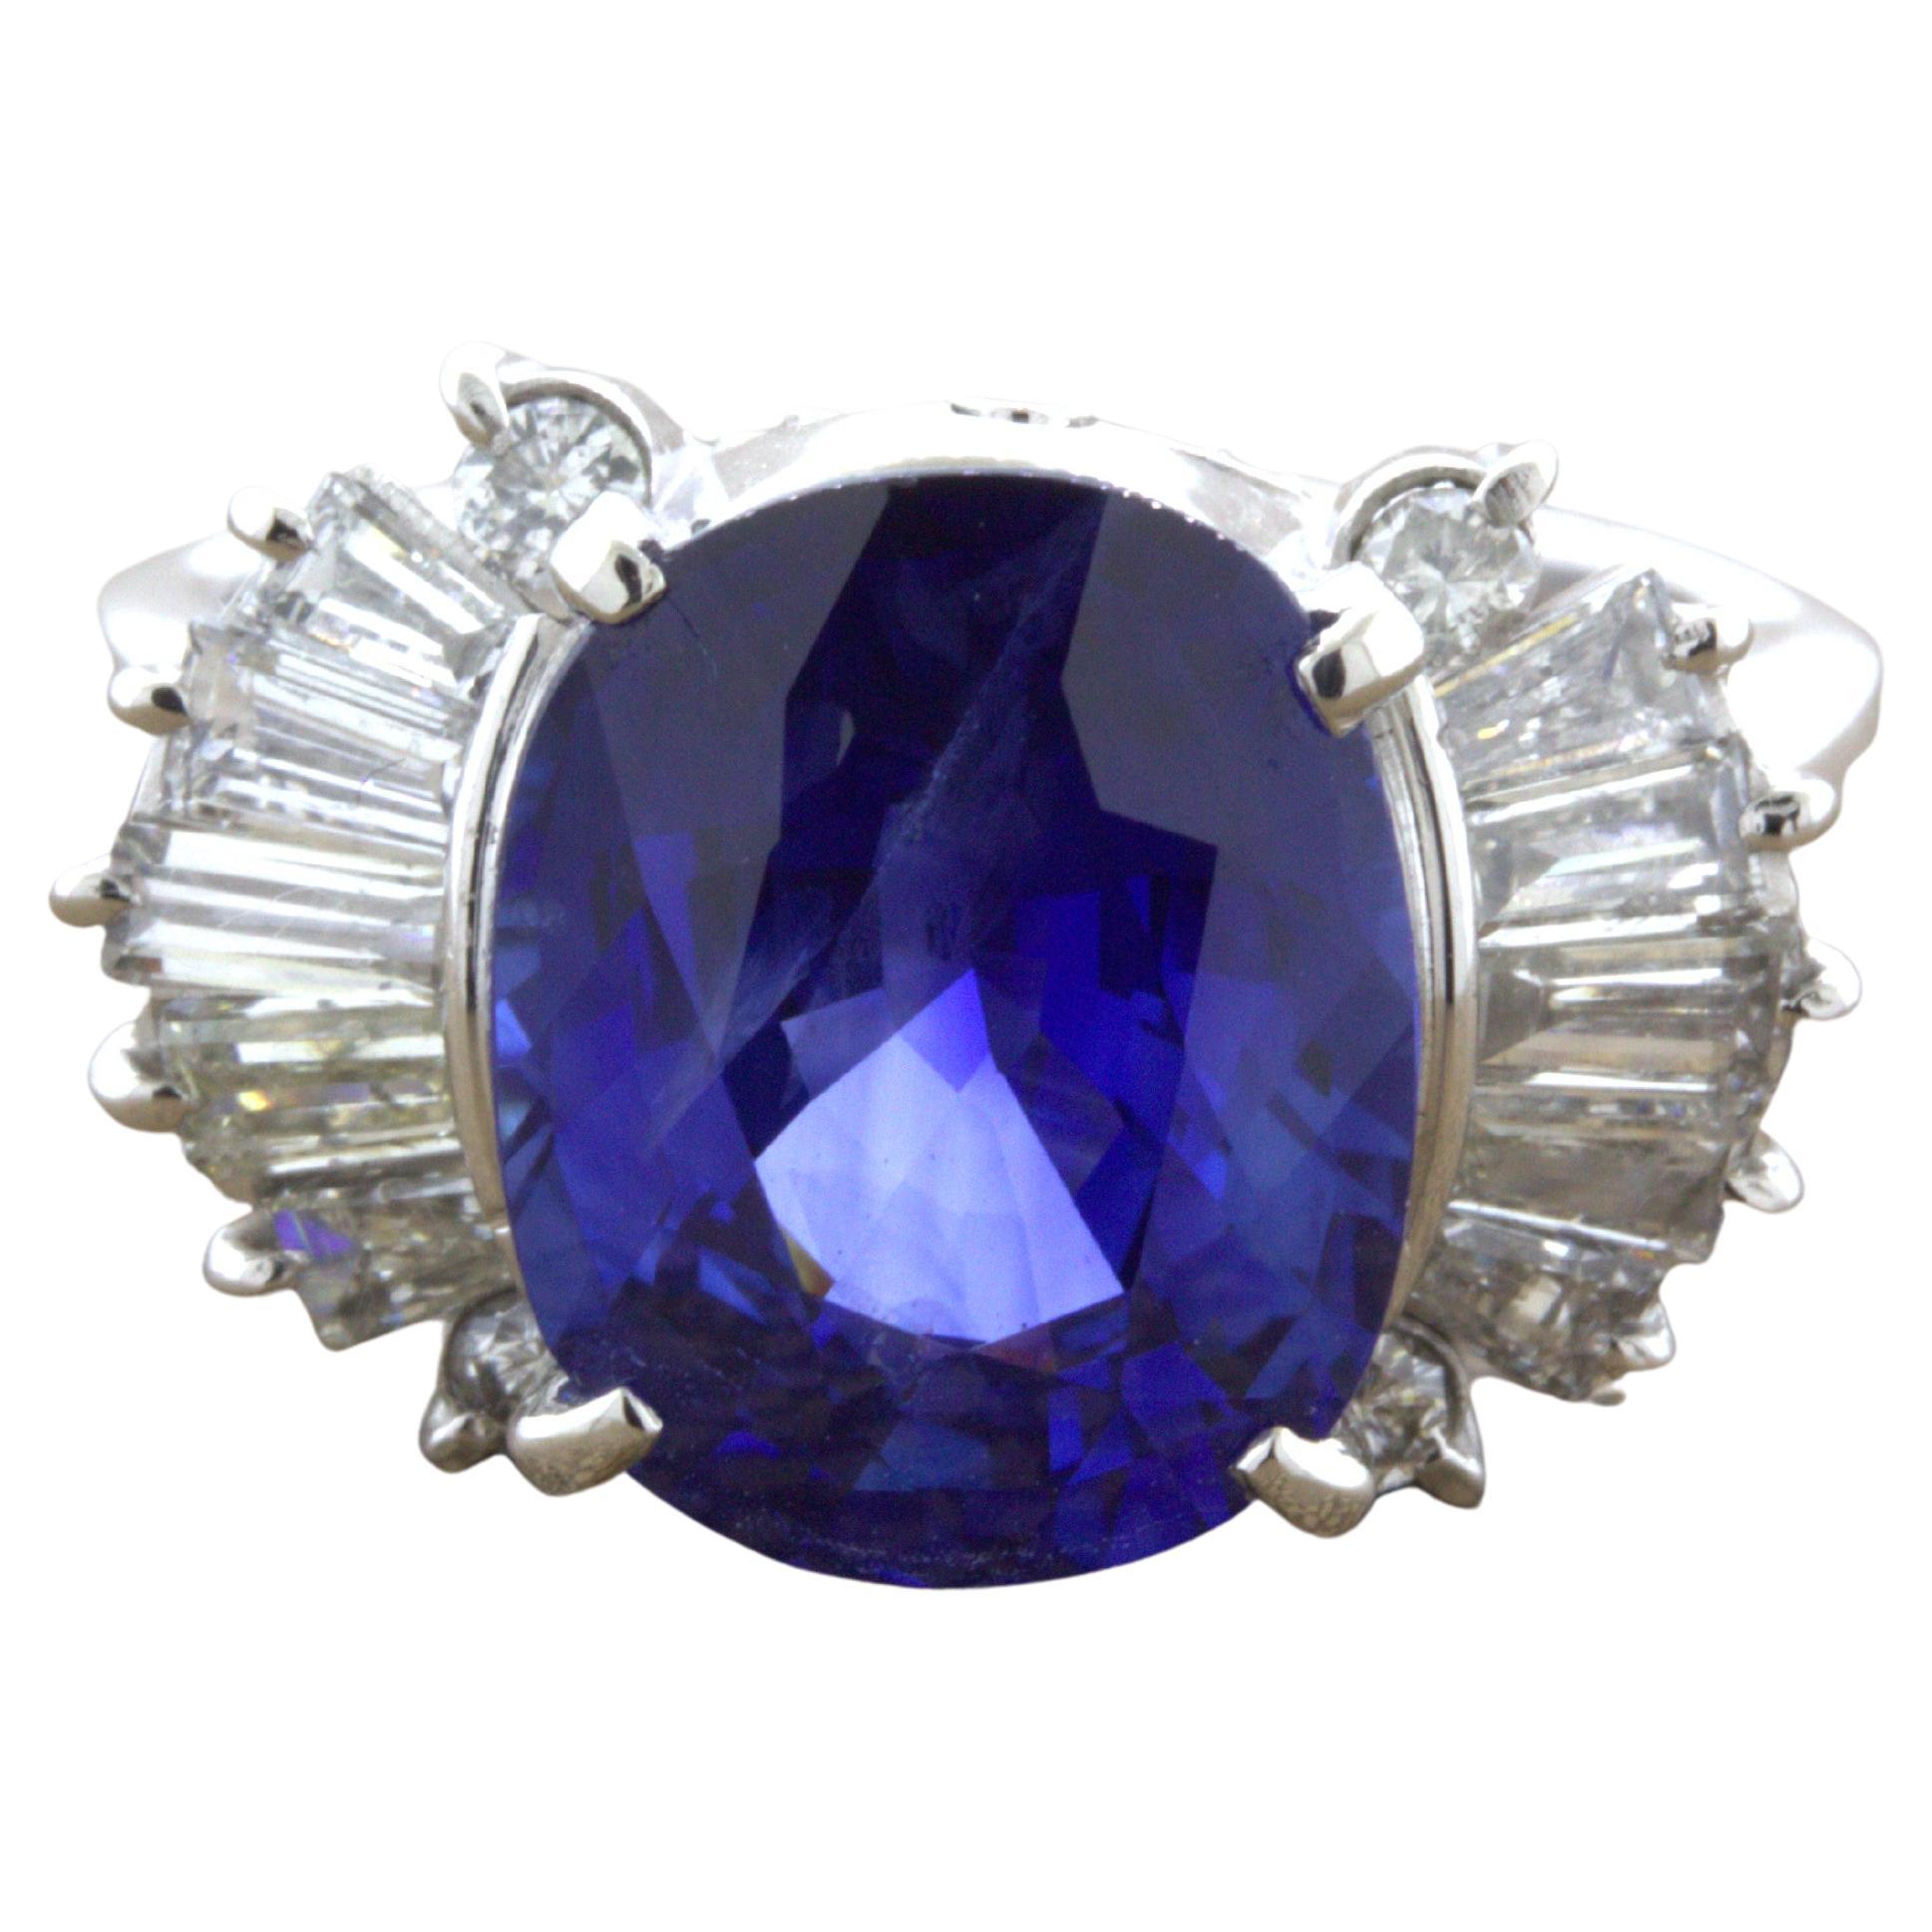 5.26 Carat Ceylon Sapphire Diamond Platinum Ring, GIA Certified For Sale